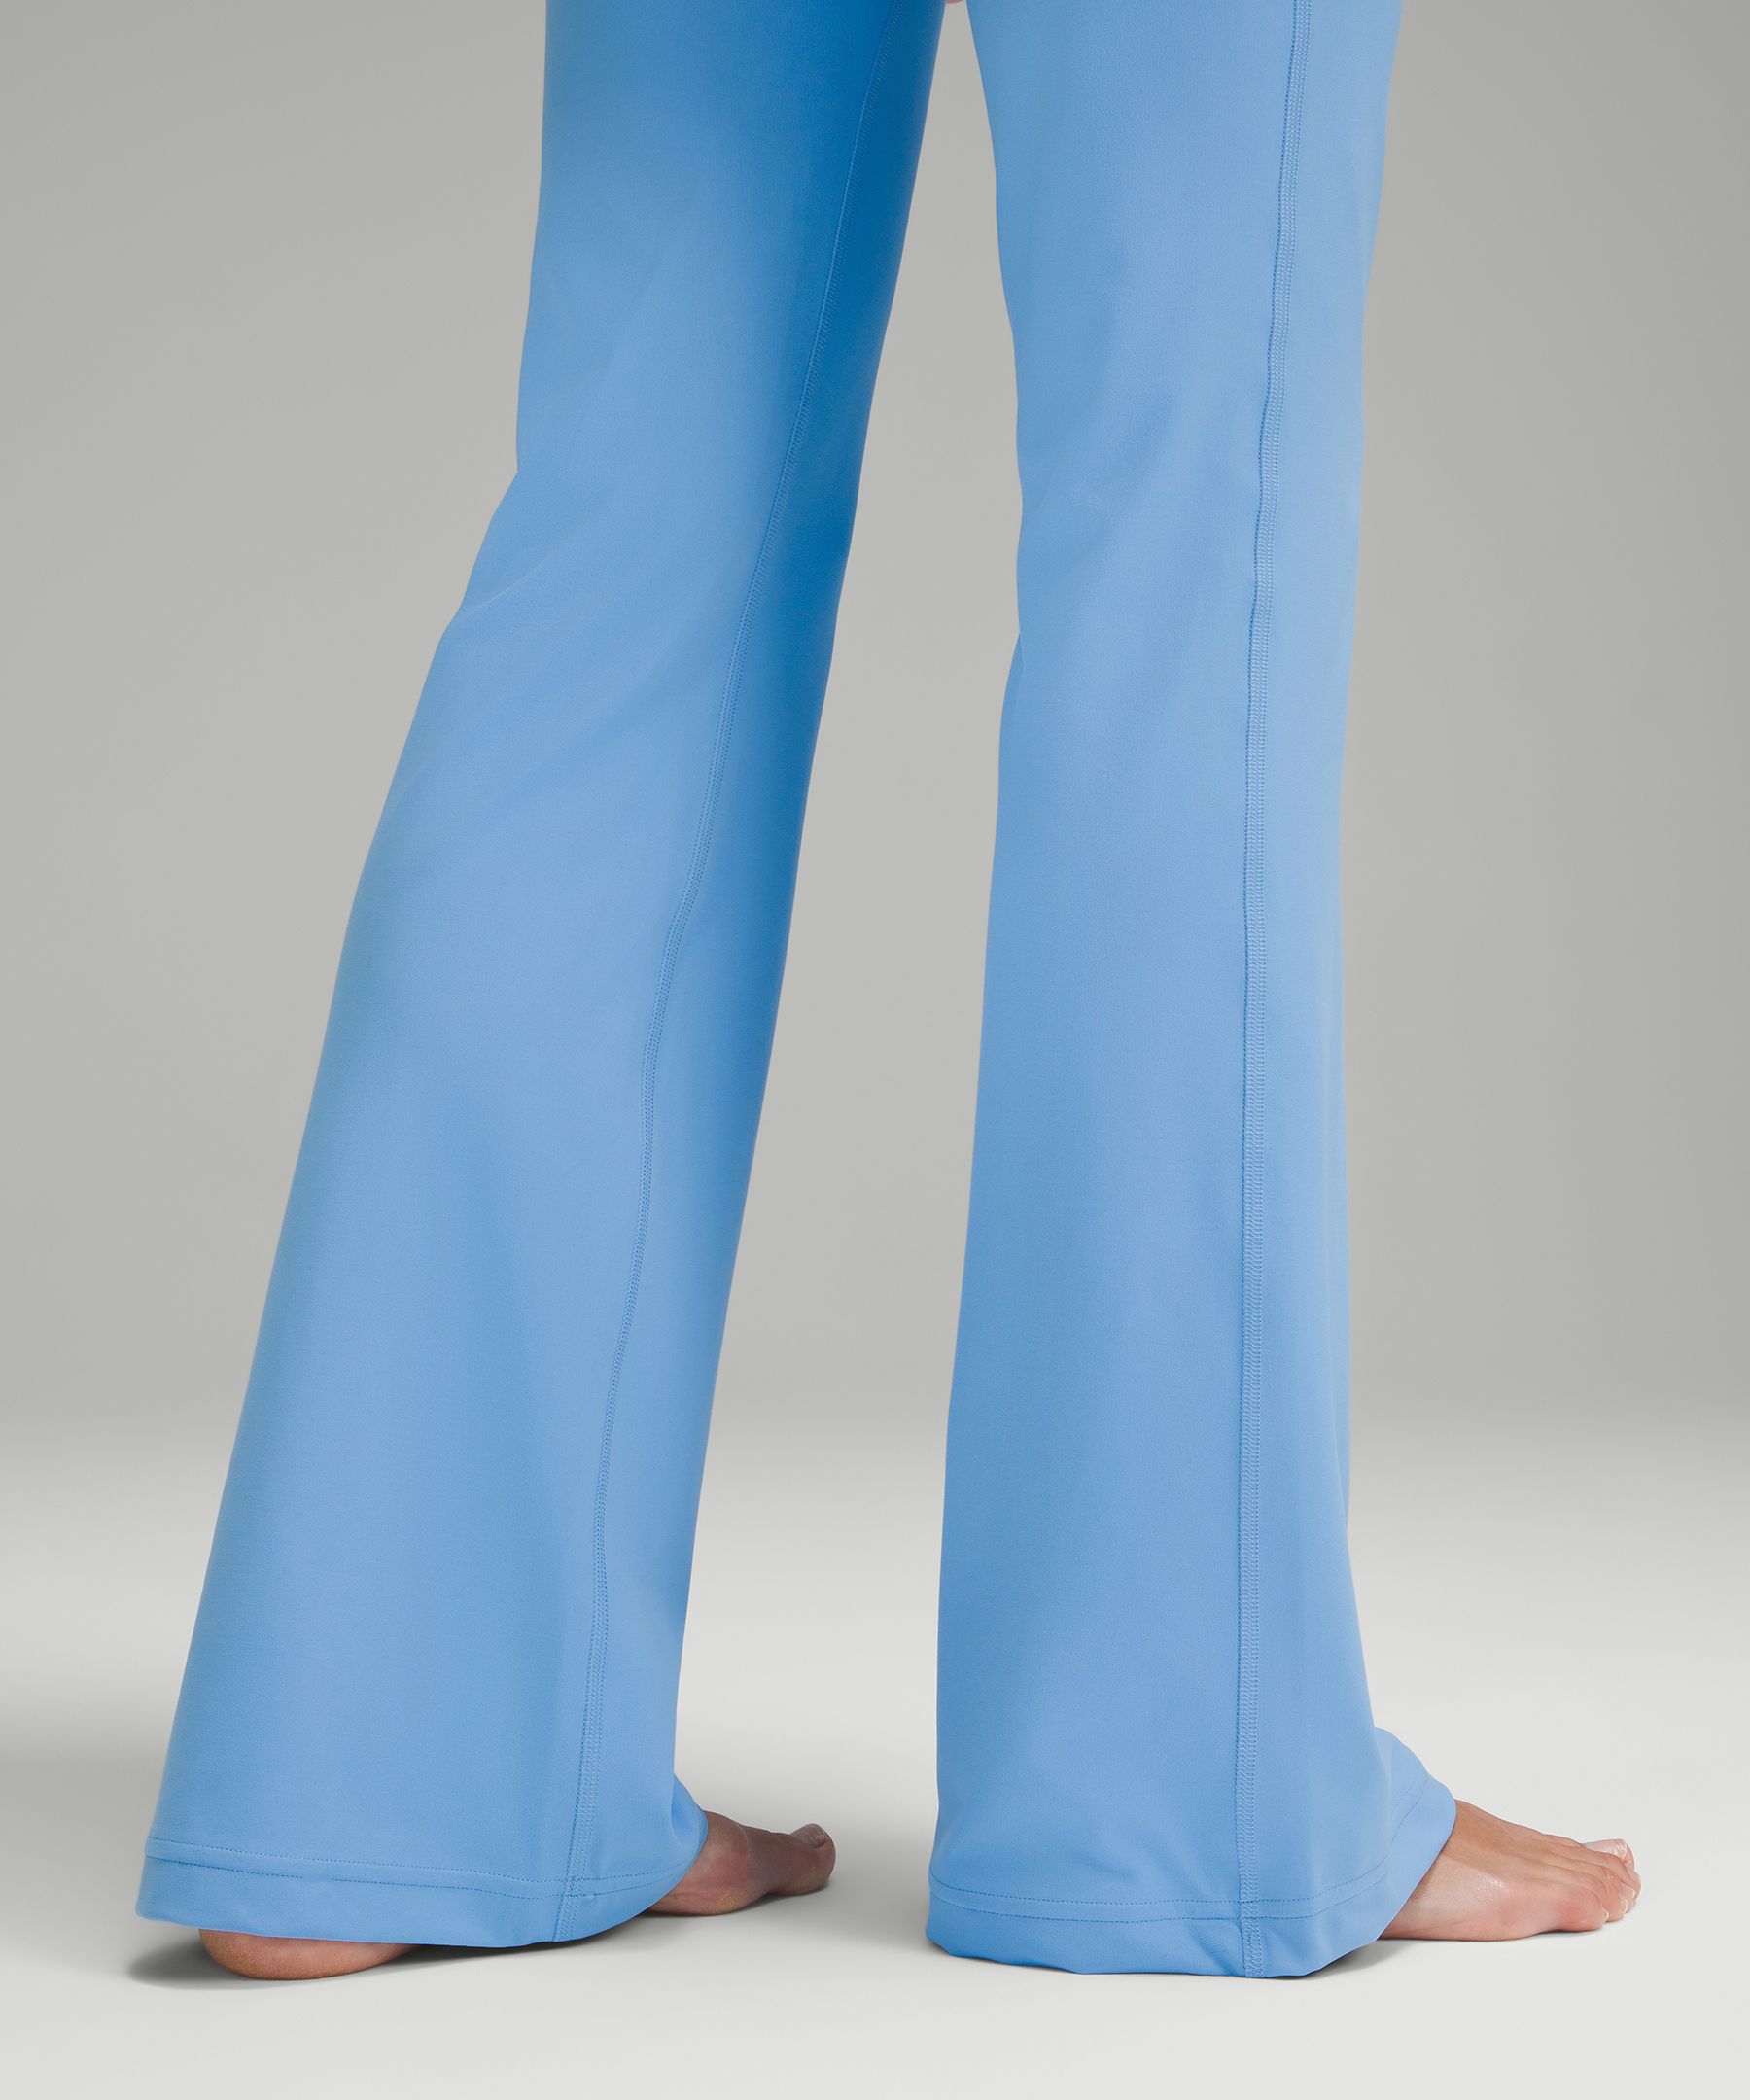 Lululemon Groove Pants Flare Leggings Black Size 4 - $50 (57% Off Retail) -  From Megan